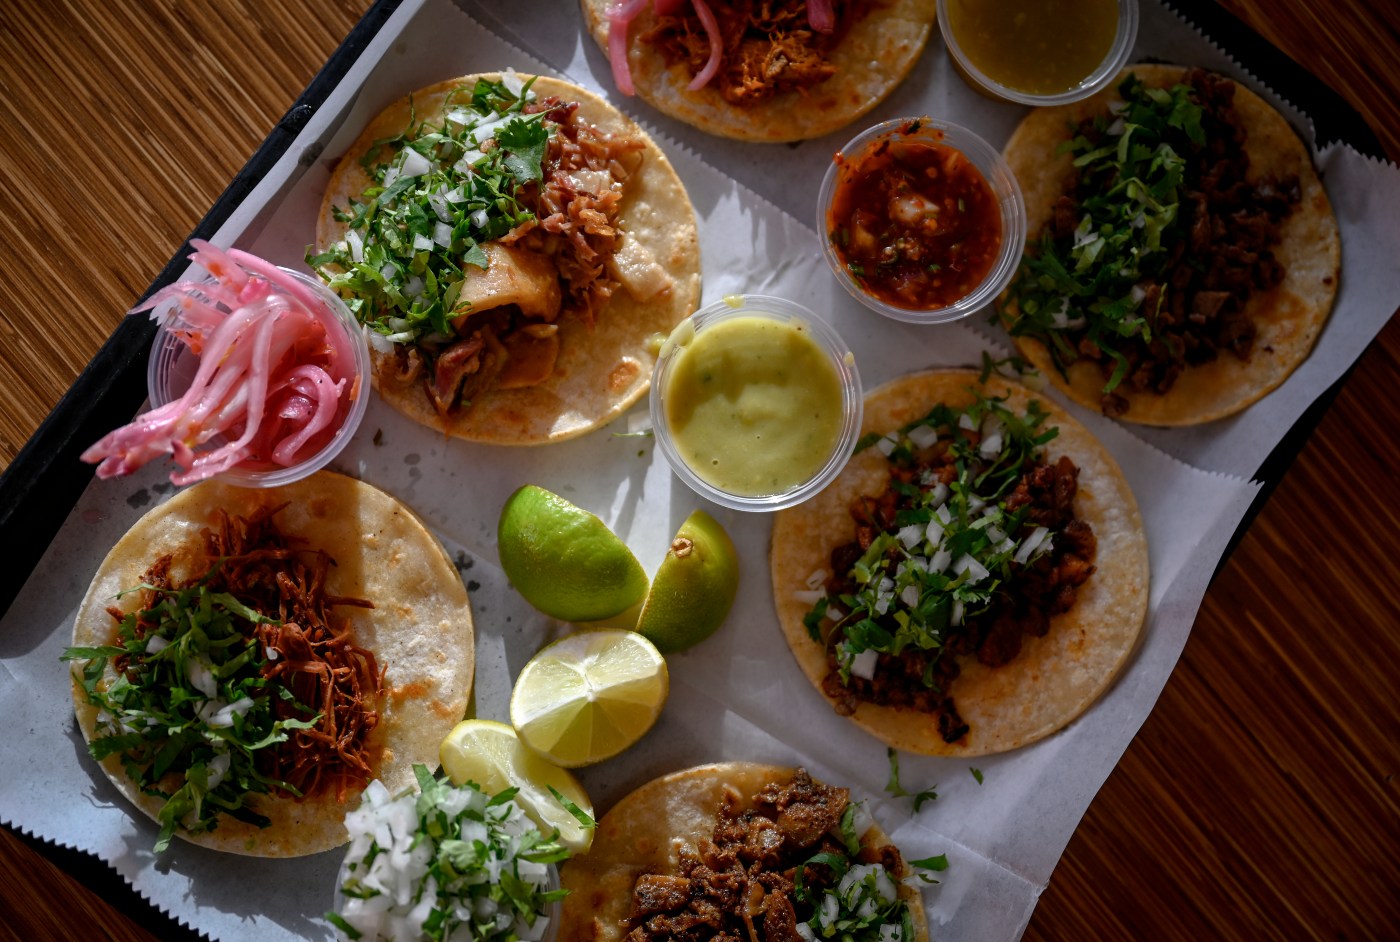 La Calle Taqueria y Carnitas' cheap street tacos are a Denver favorite